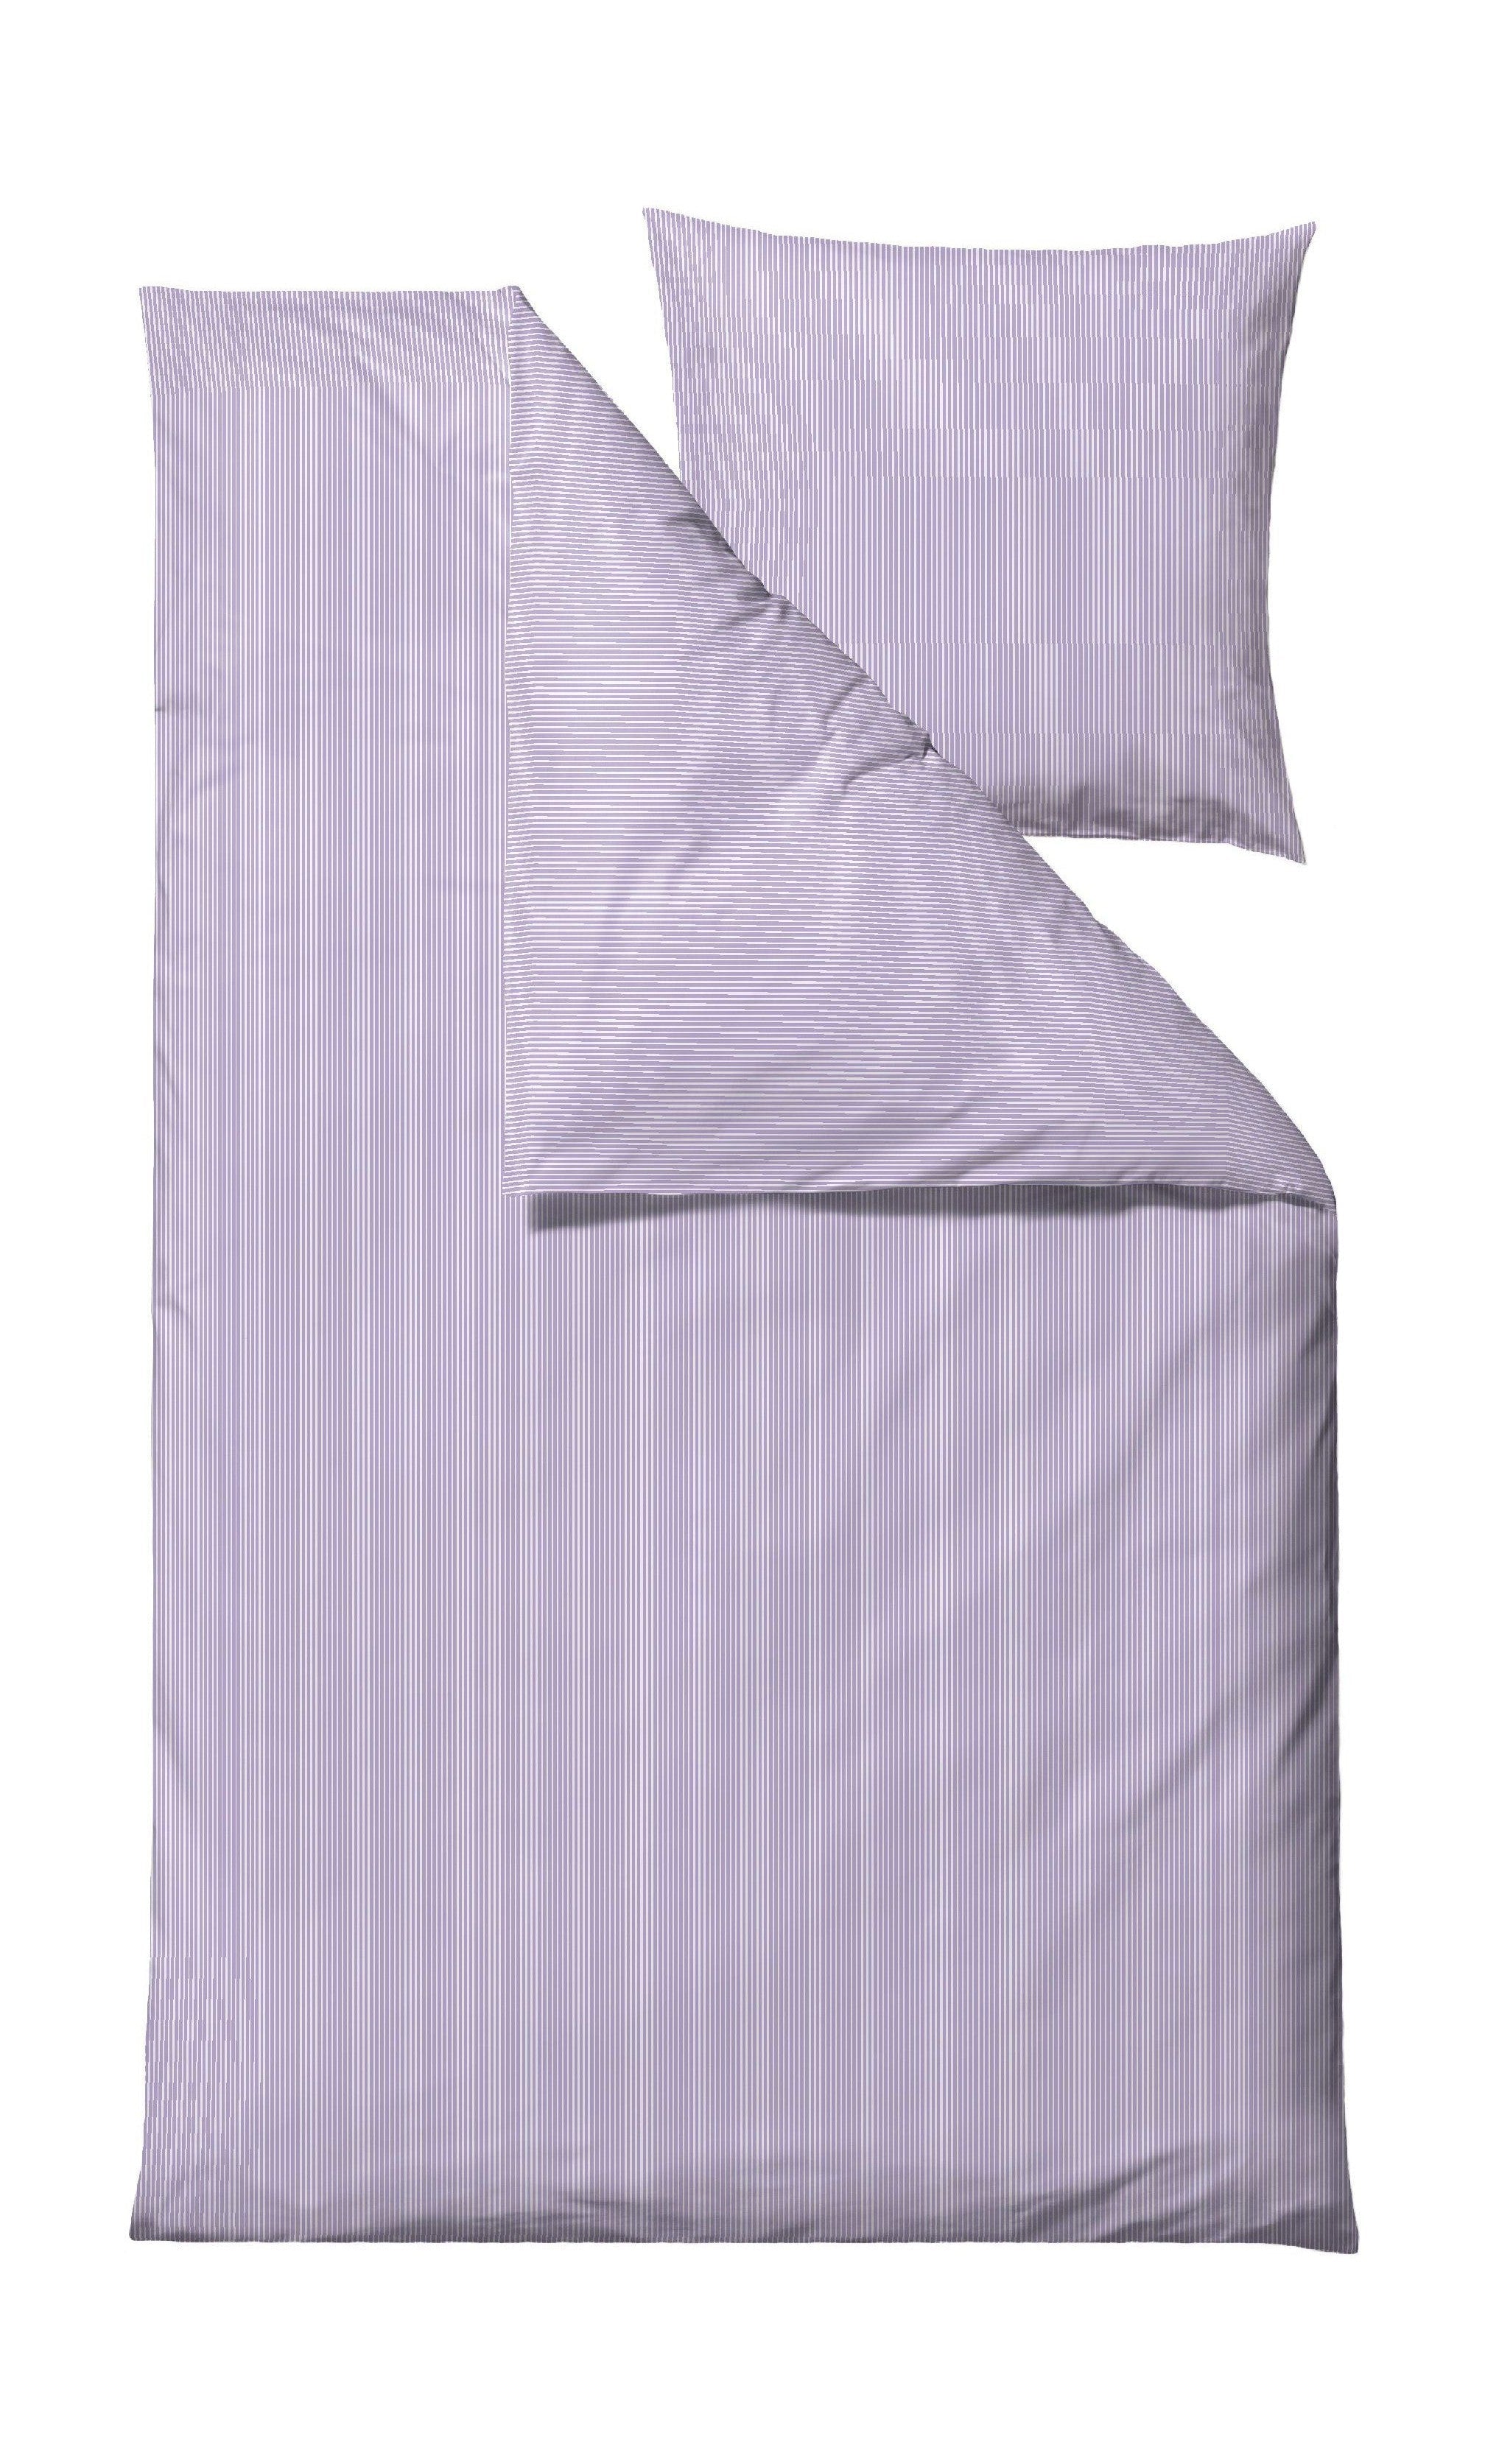 Södahl Fröhliches Bett Leinen 140 x 220 cm, Lavendel